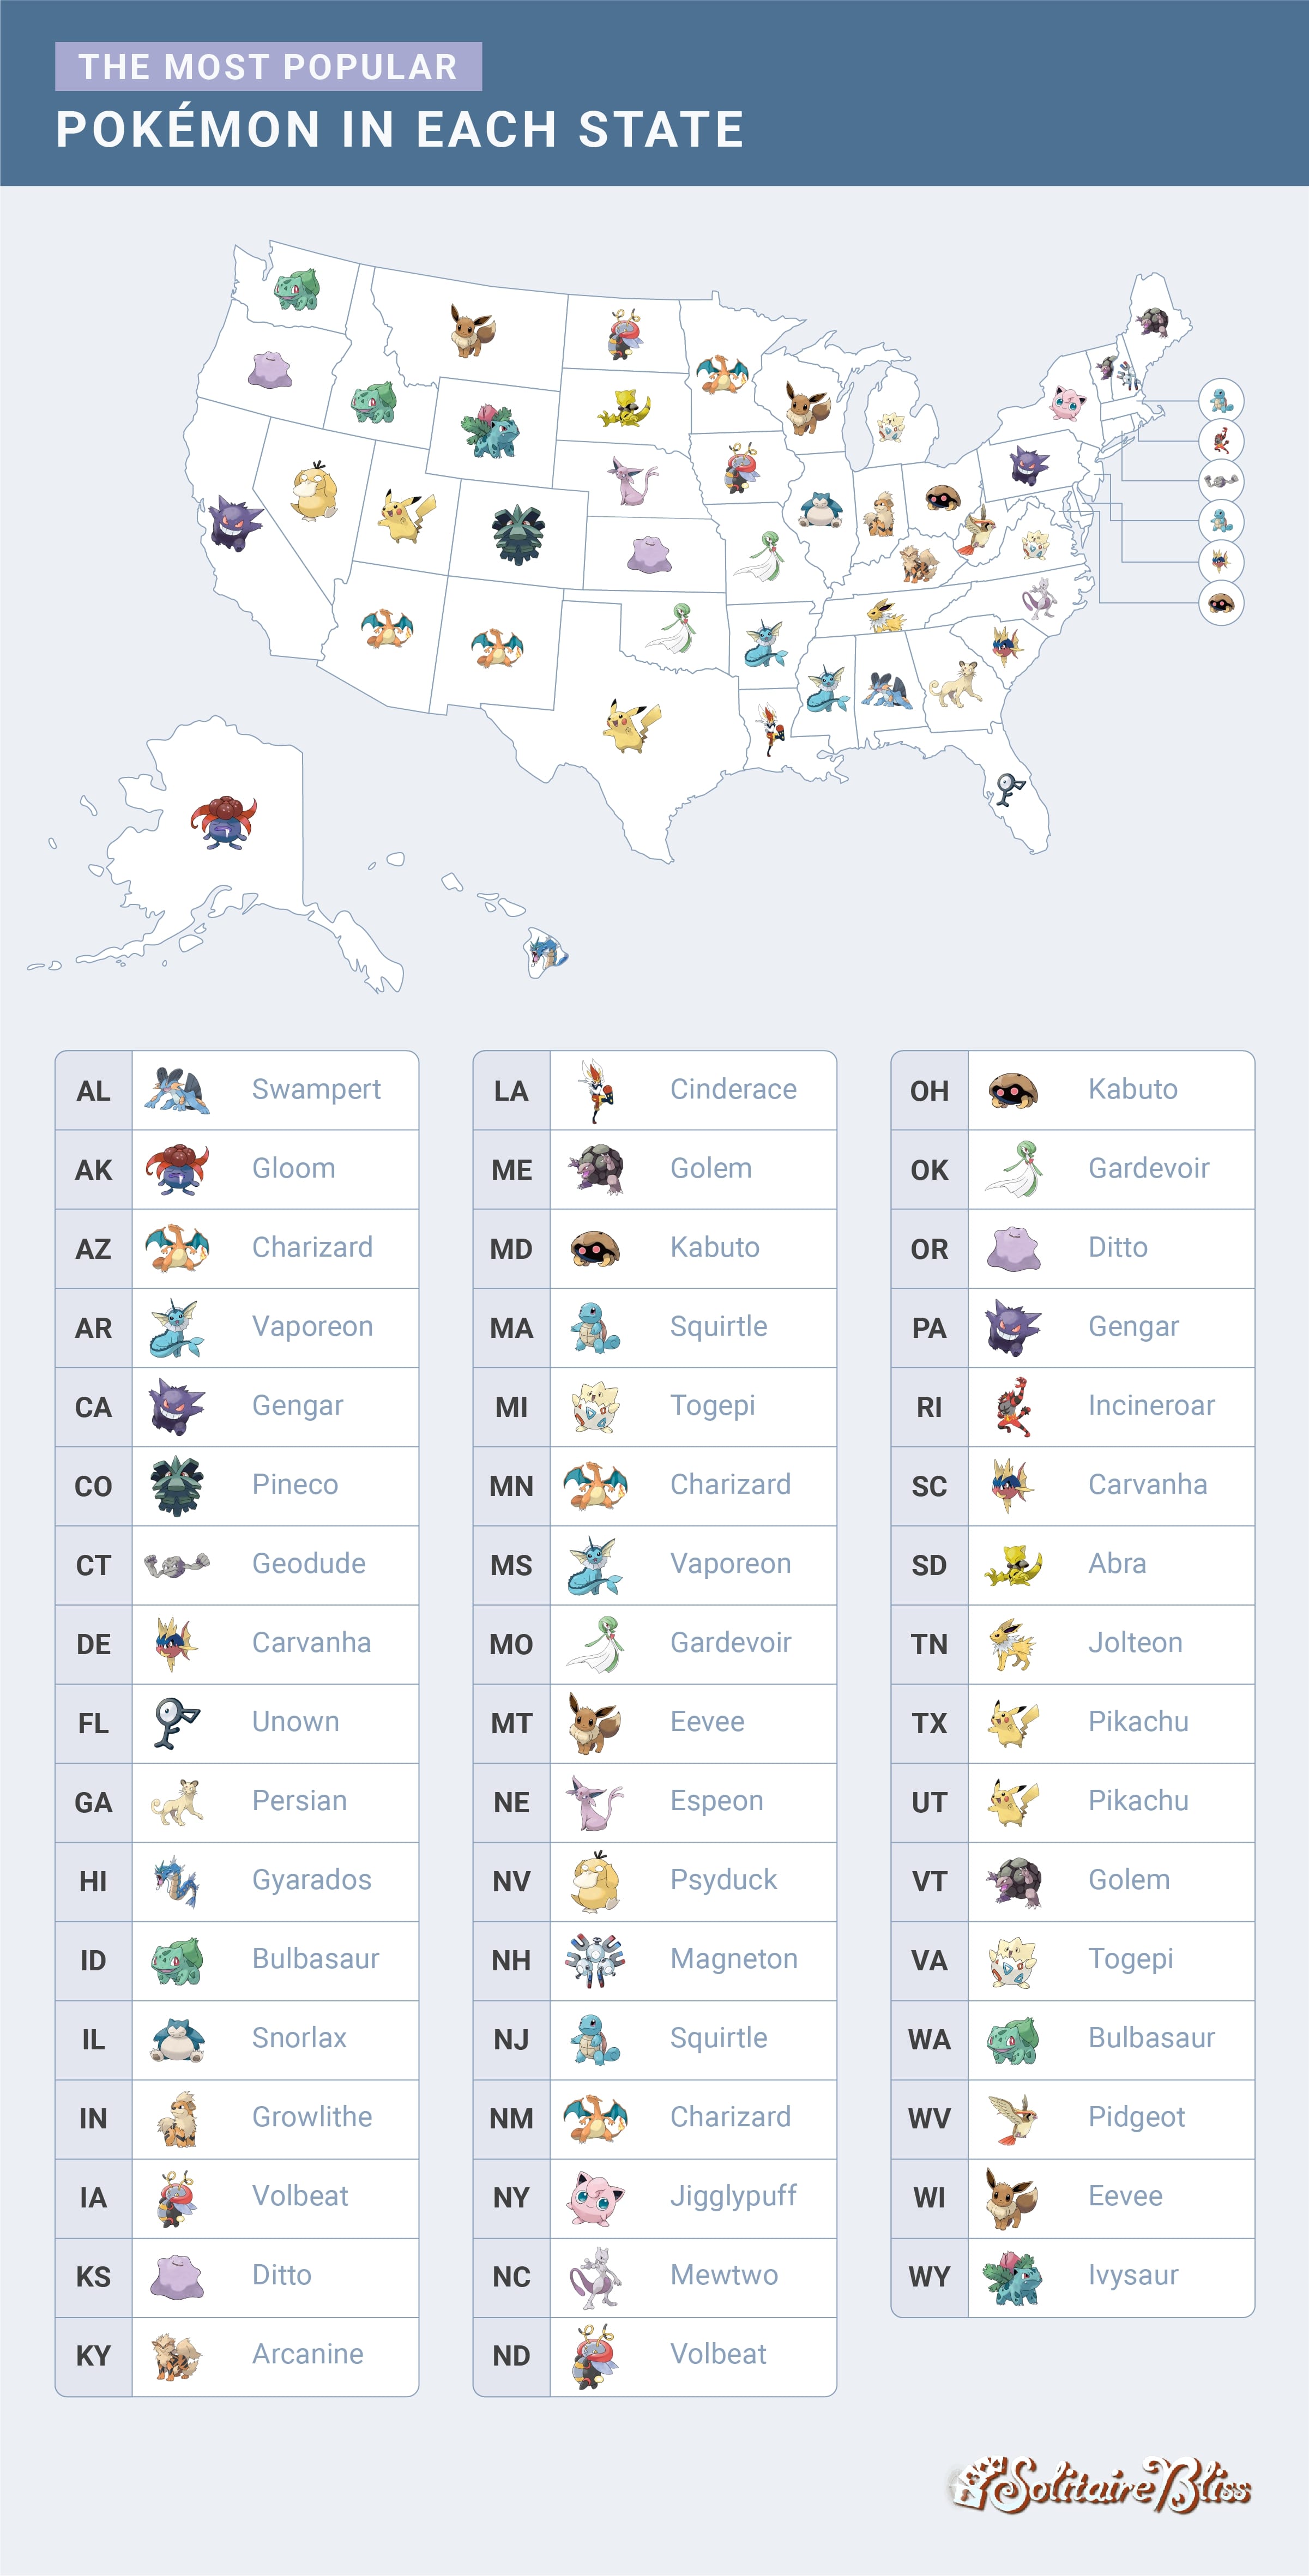 Pokémon in each state